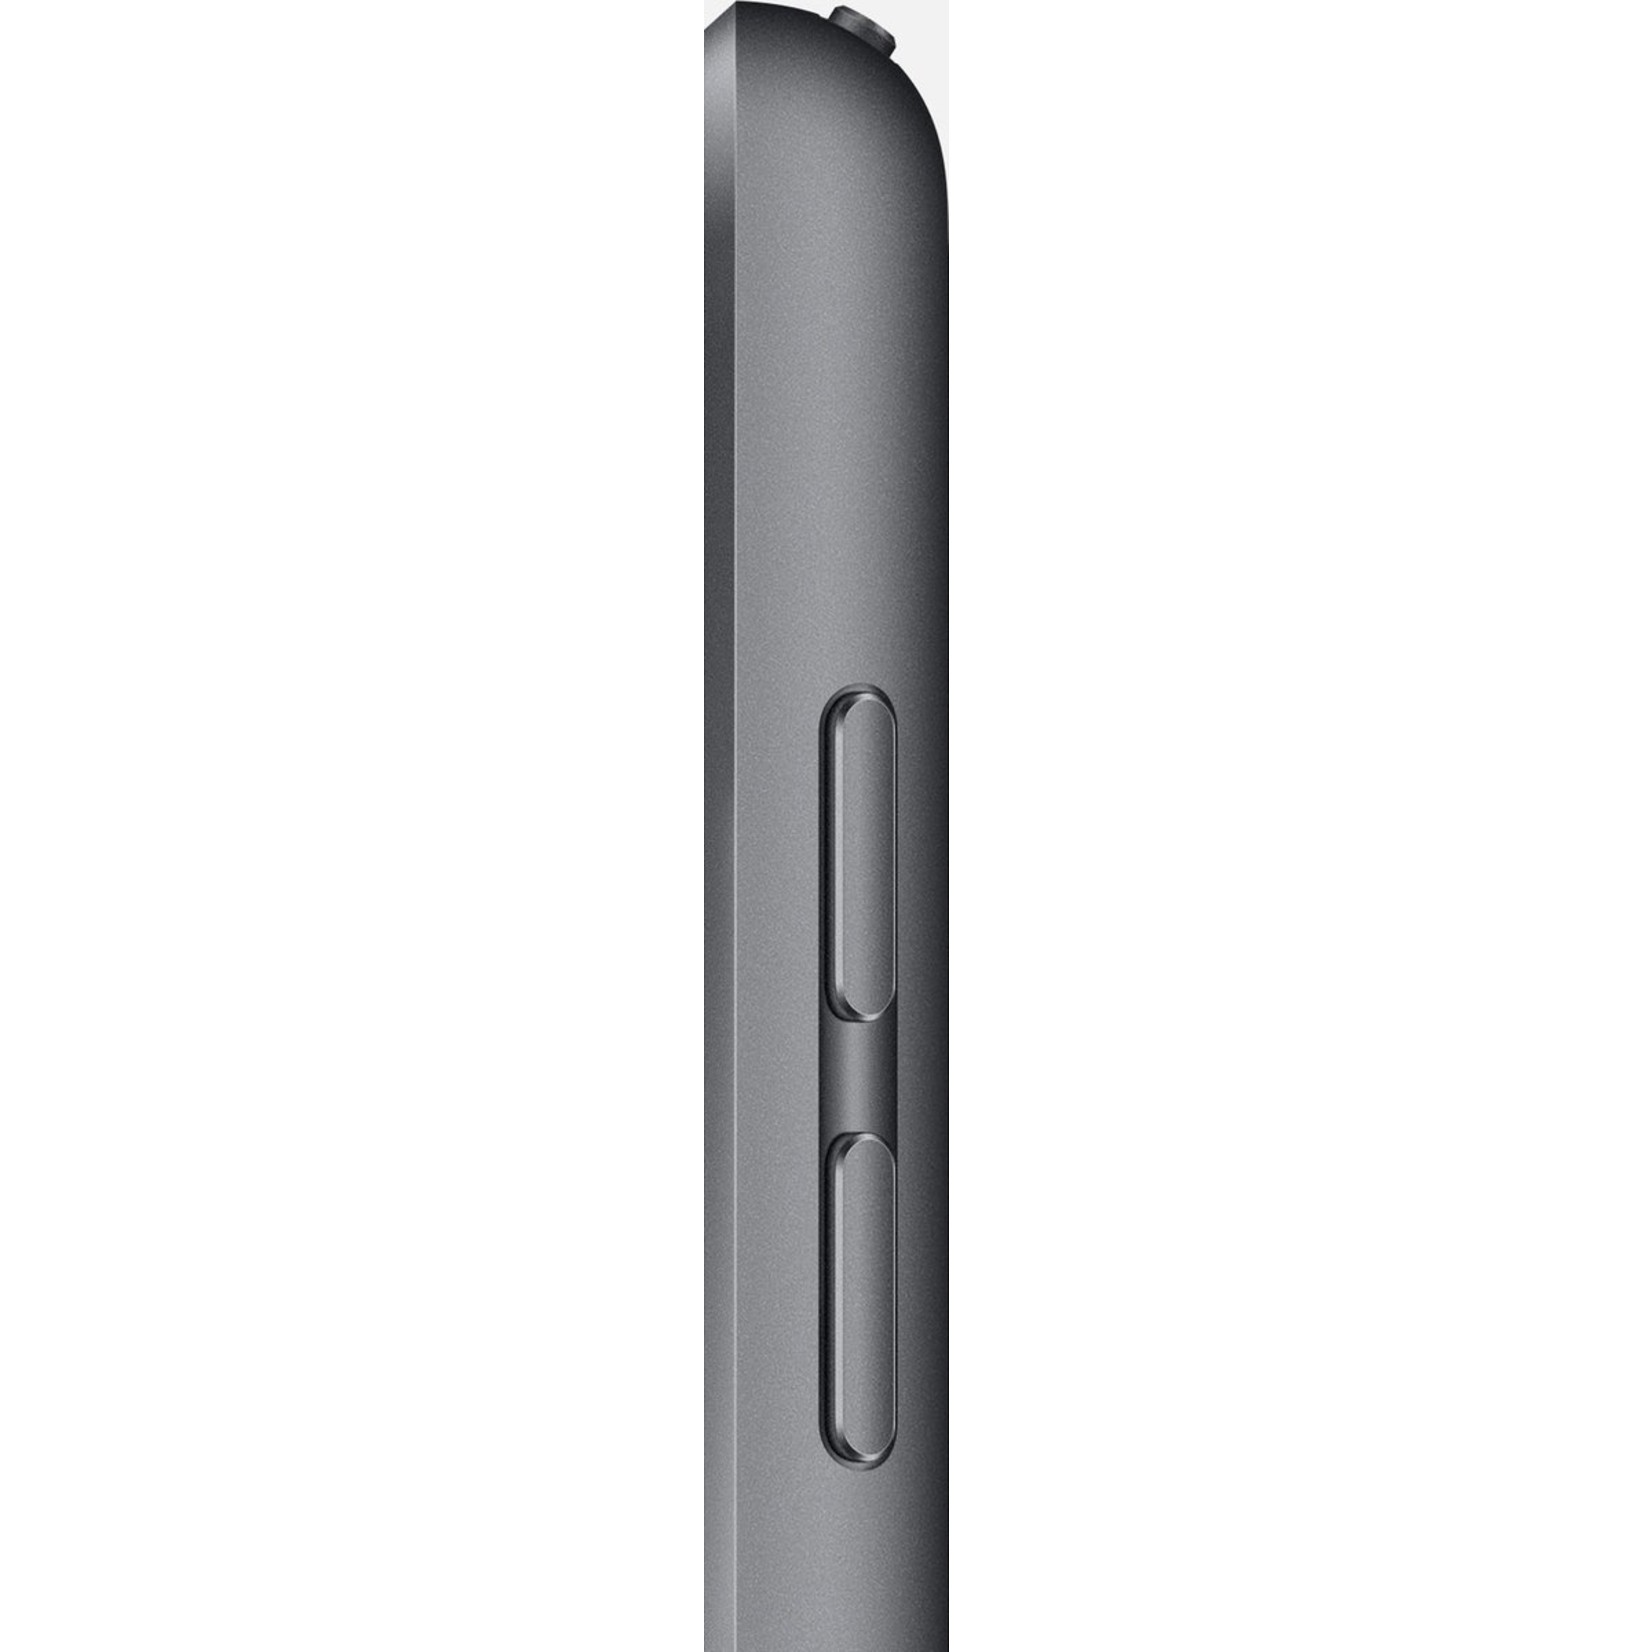 Apple iPad (2020) 10.2 inch Wifi 32GB Grijs